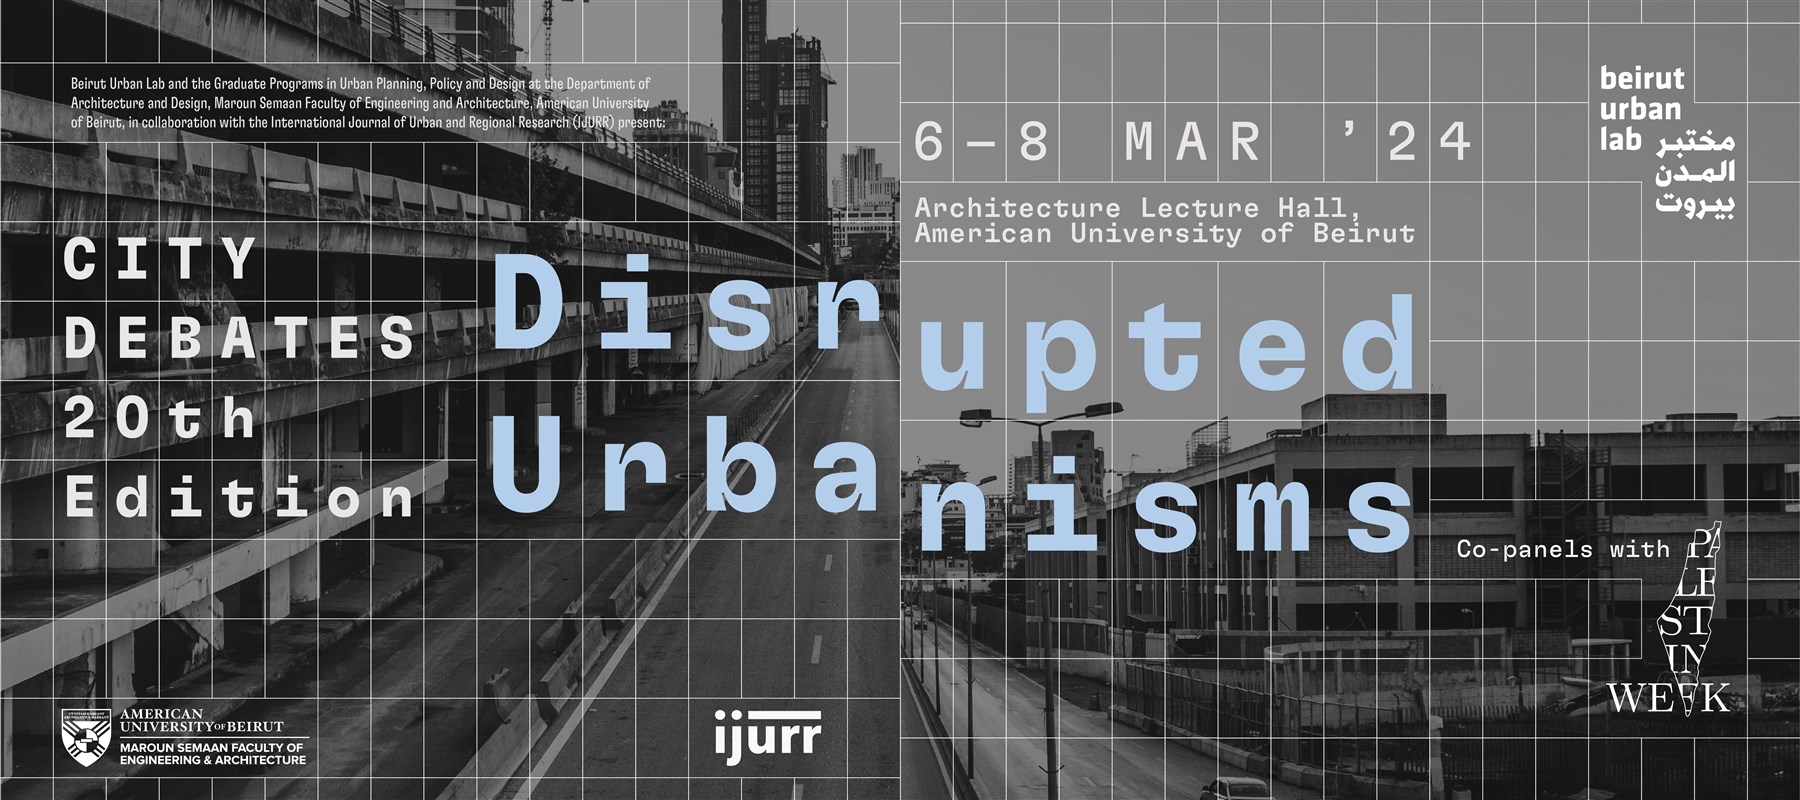 City Debates 20th Edition: Disrupted Urbanisms